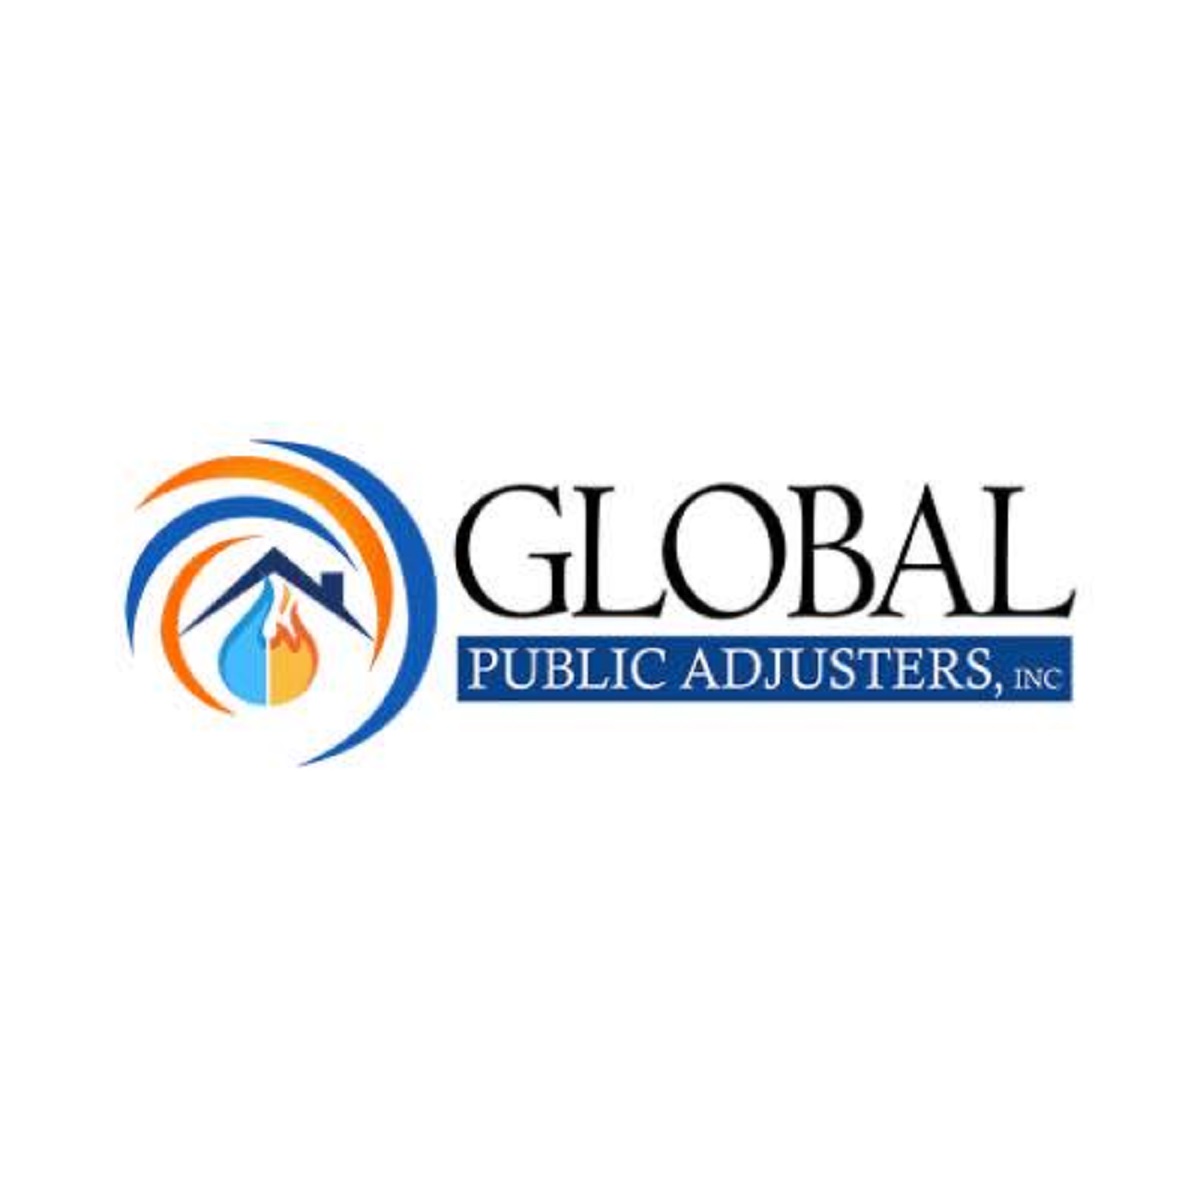 Inc. Global Public Adjusters